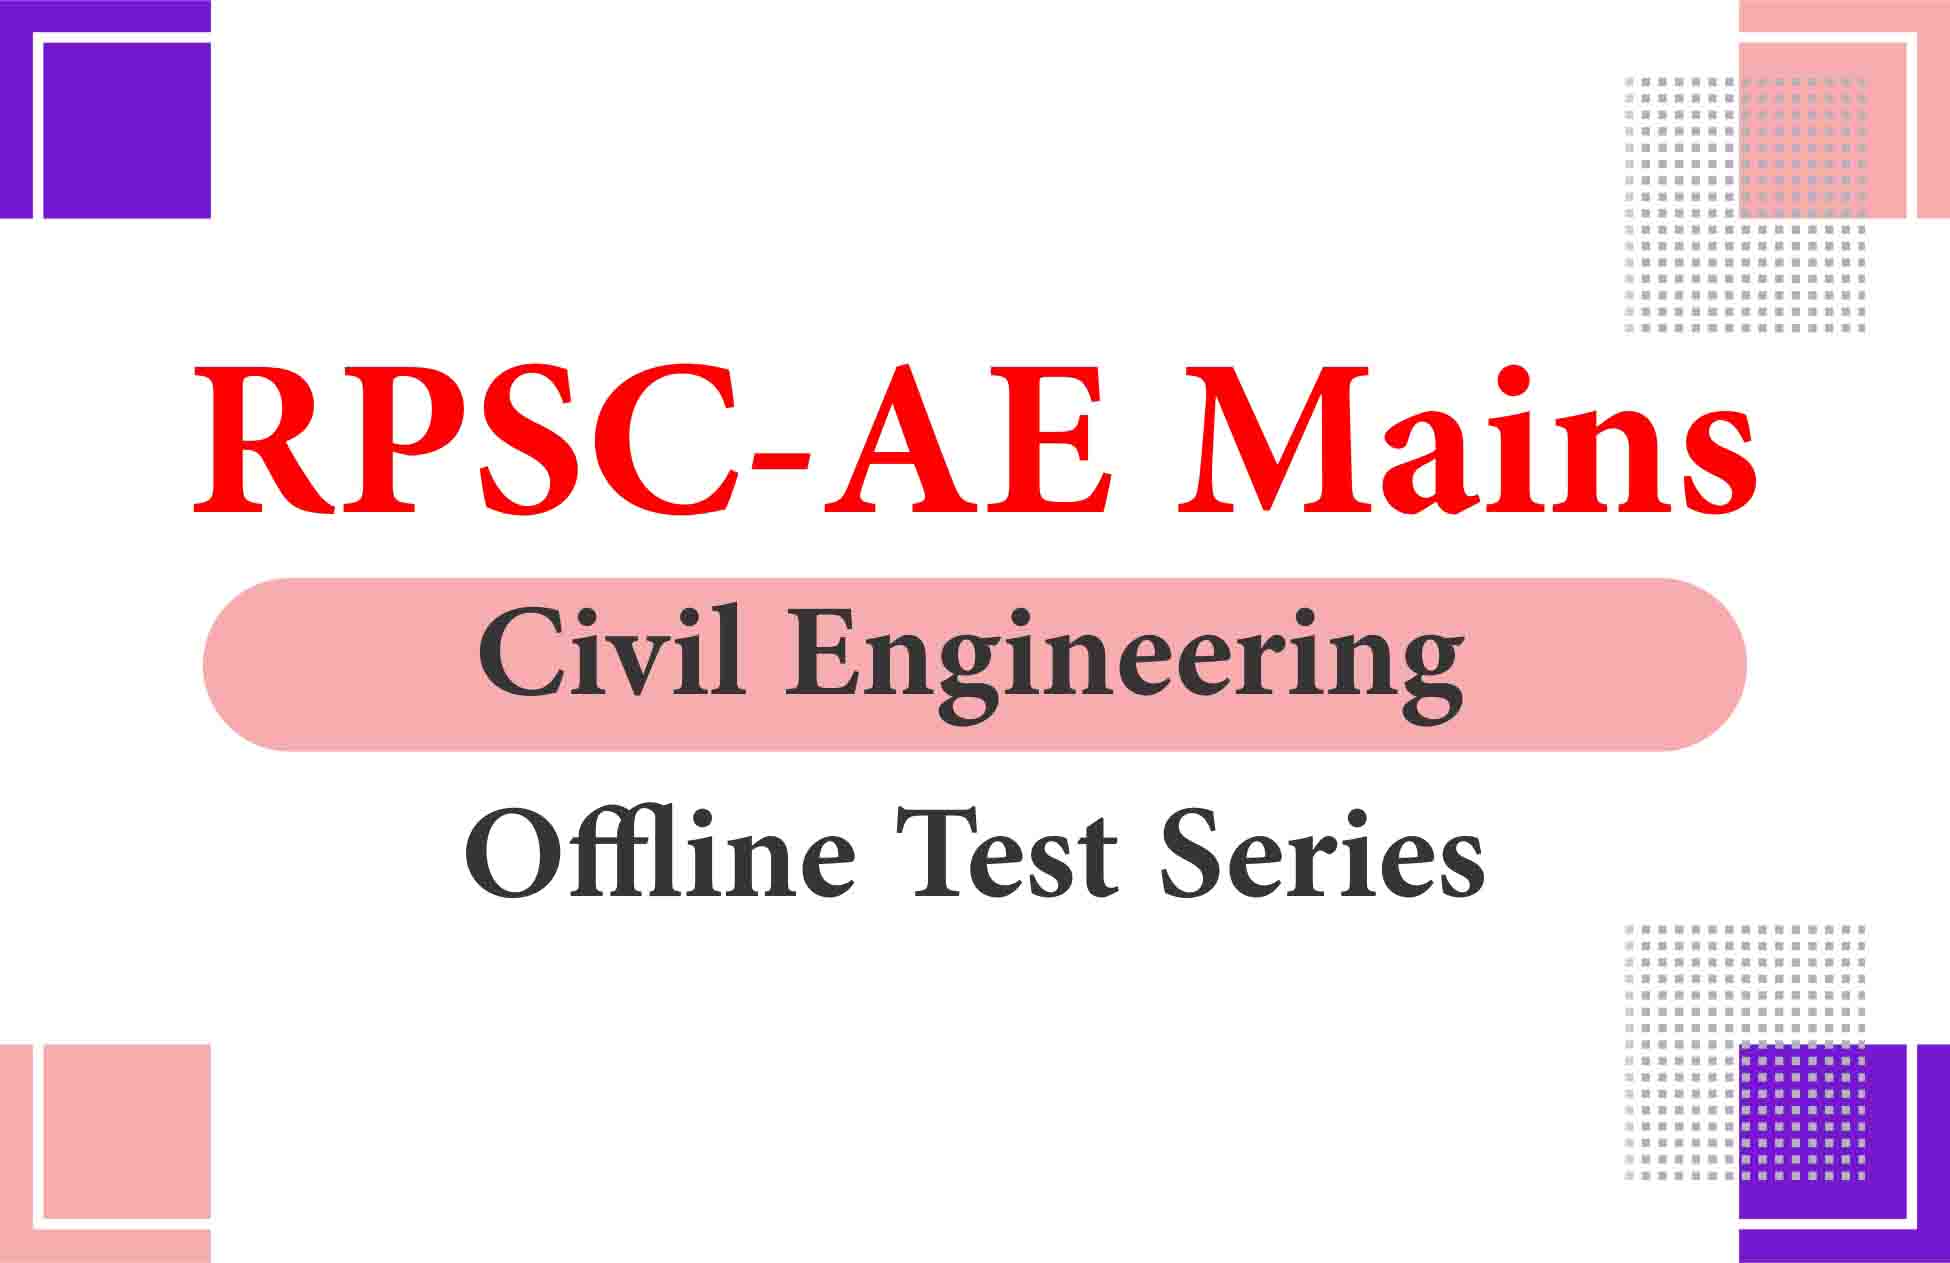 RPSC-AE Mains Civil Engineering Offline Test Series